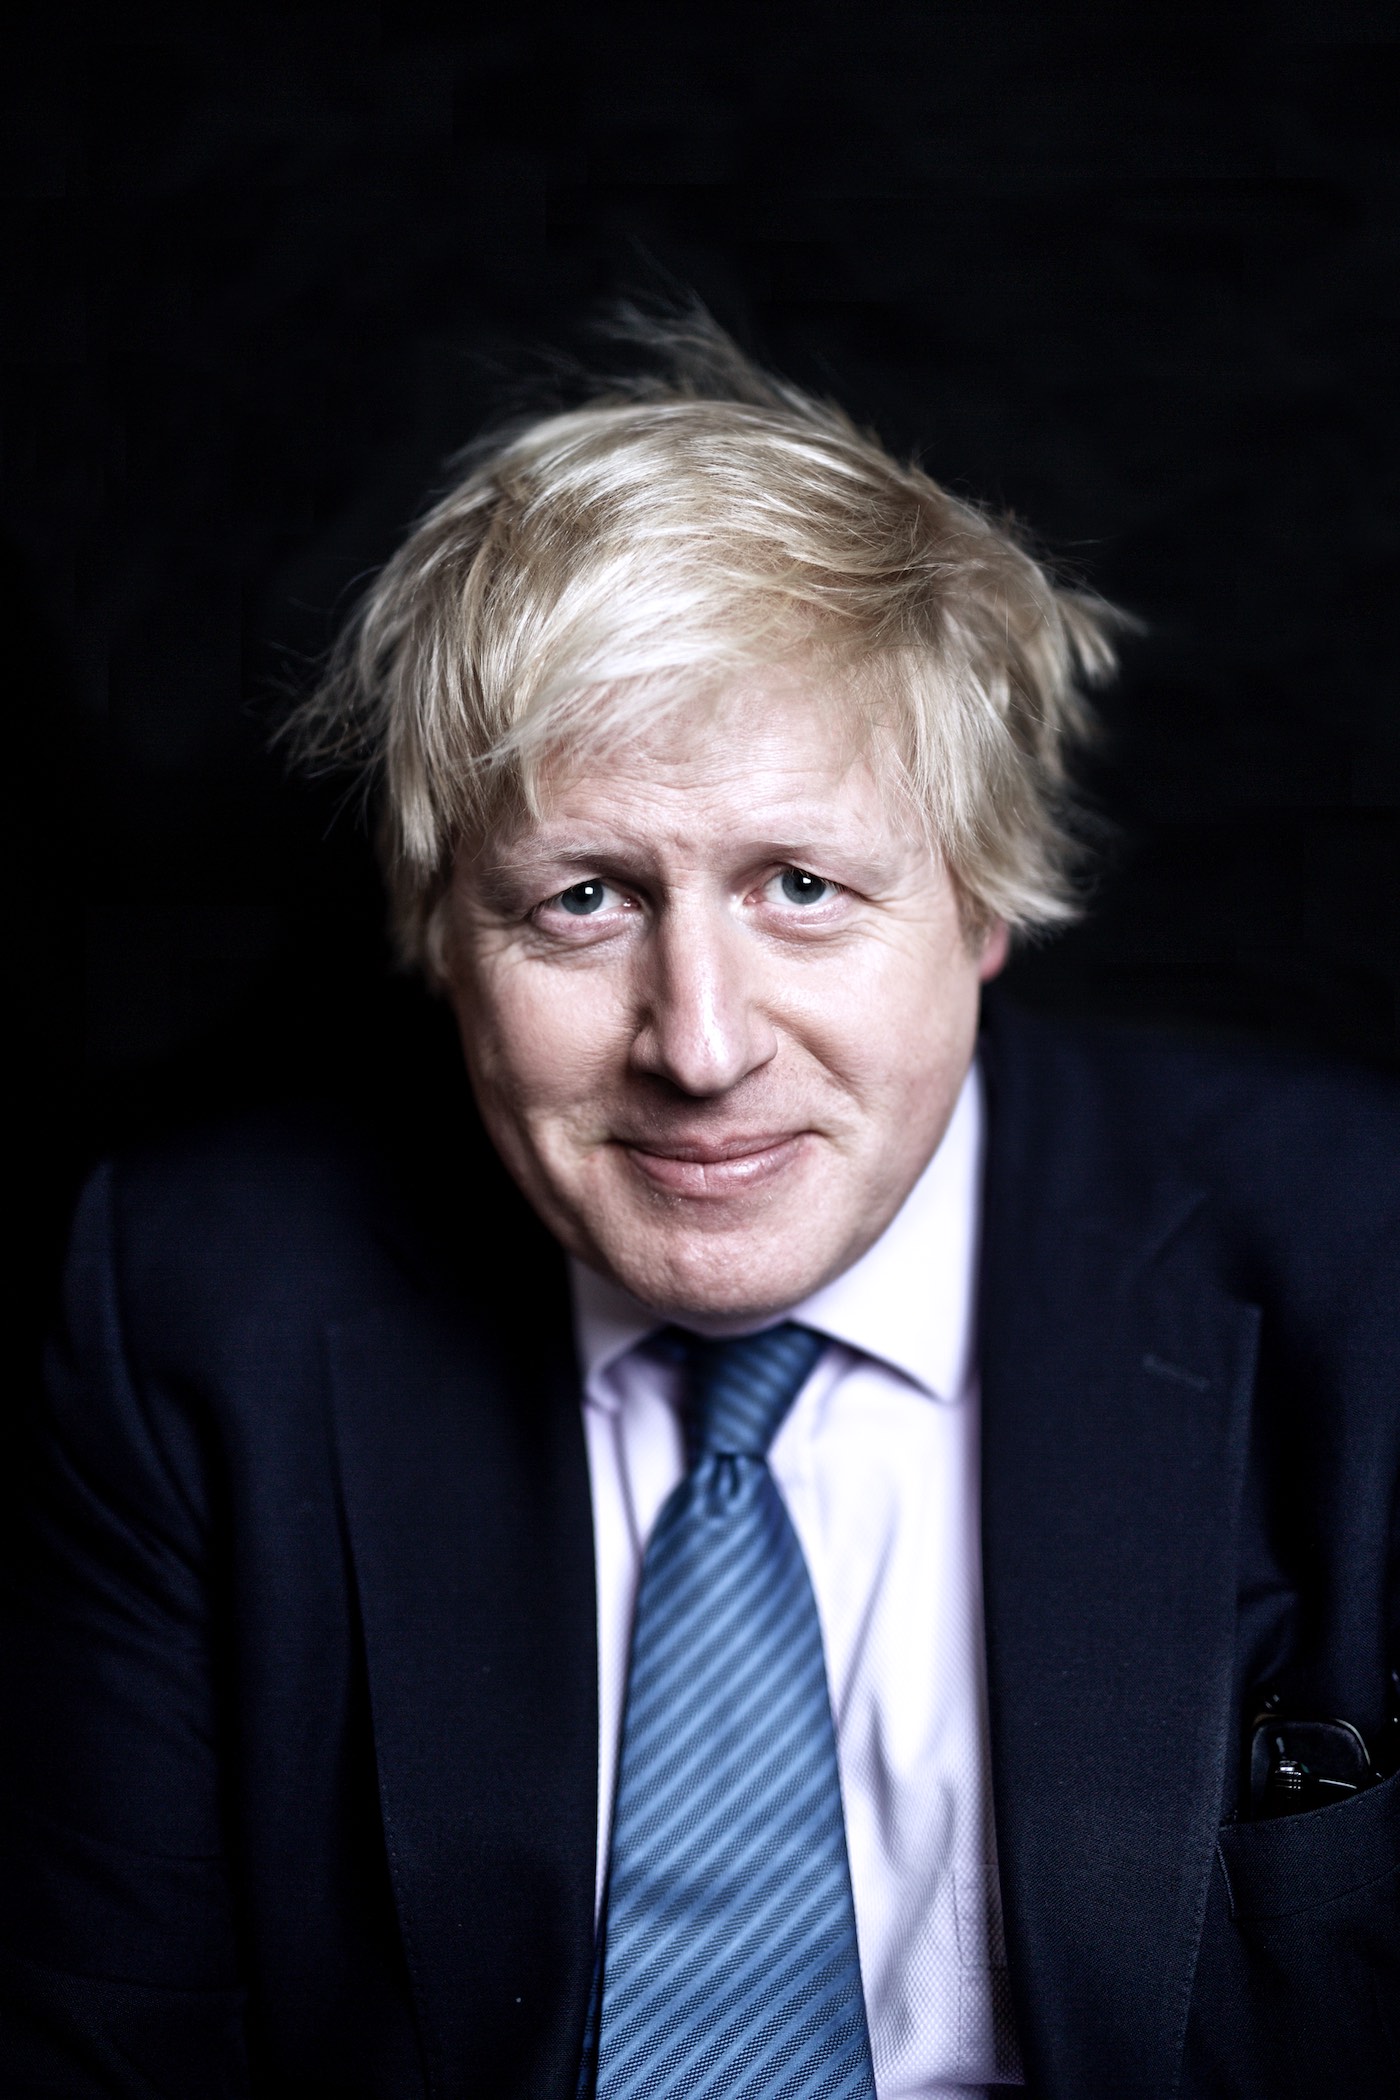  Boris Johnson, 2015 